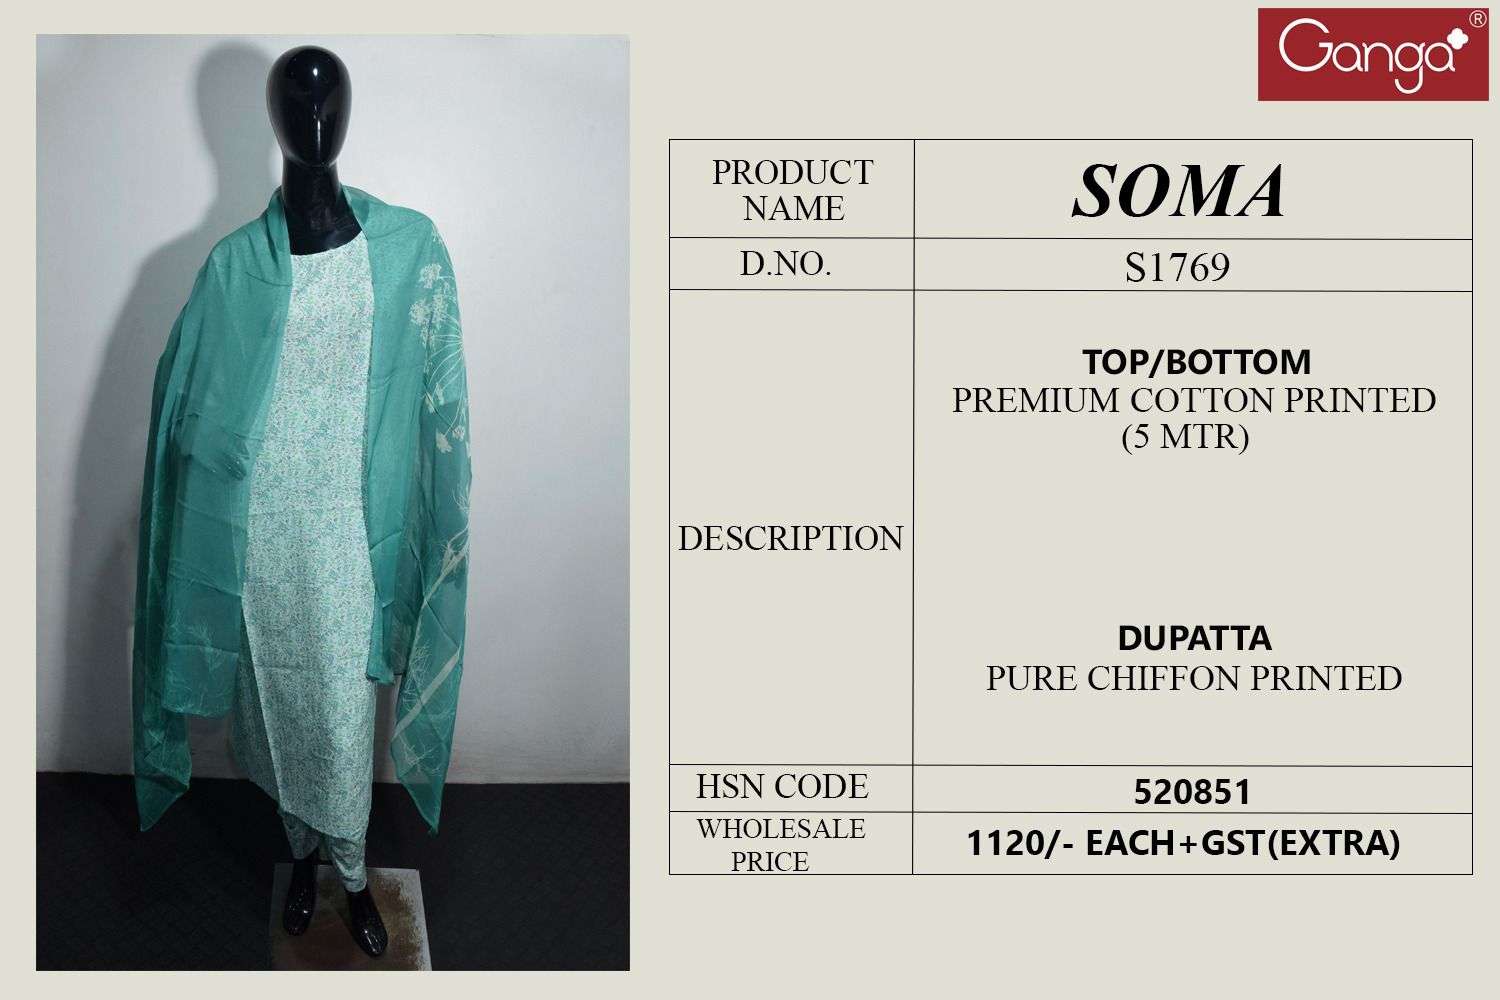 ganga soma 1769 series premium cotton designer salwar kameez catalogue surat 